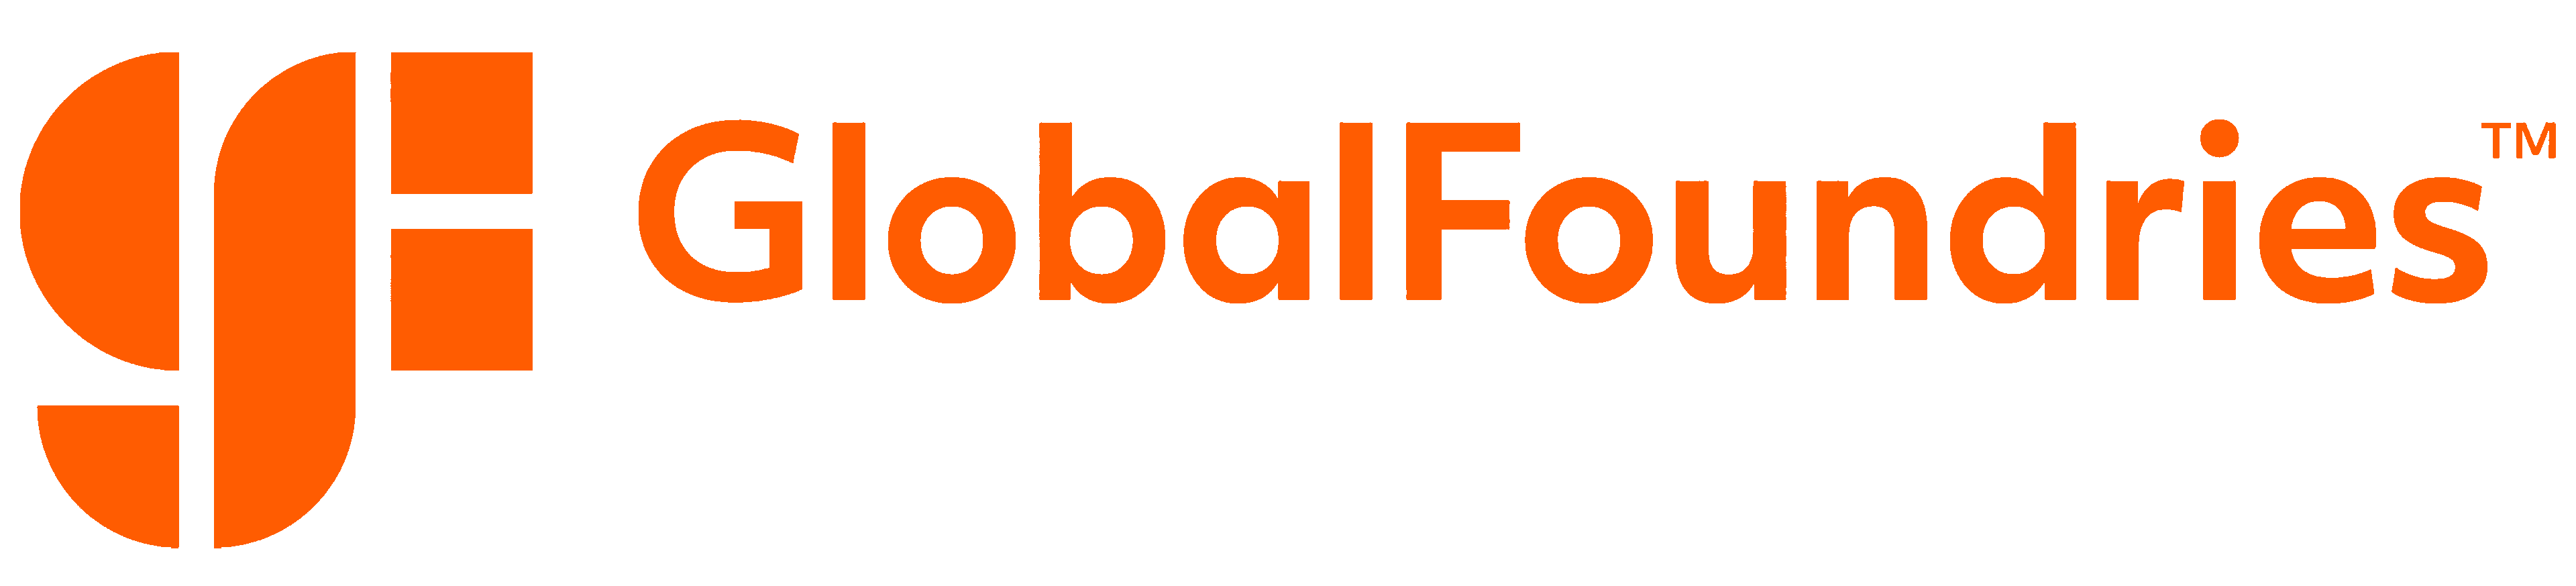 GlobalFoundries-Logo